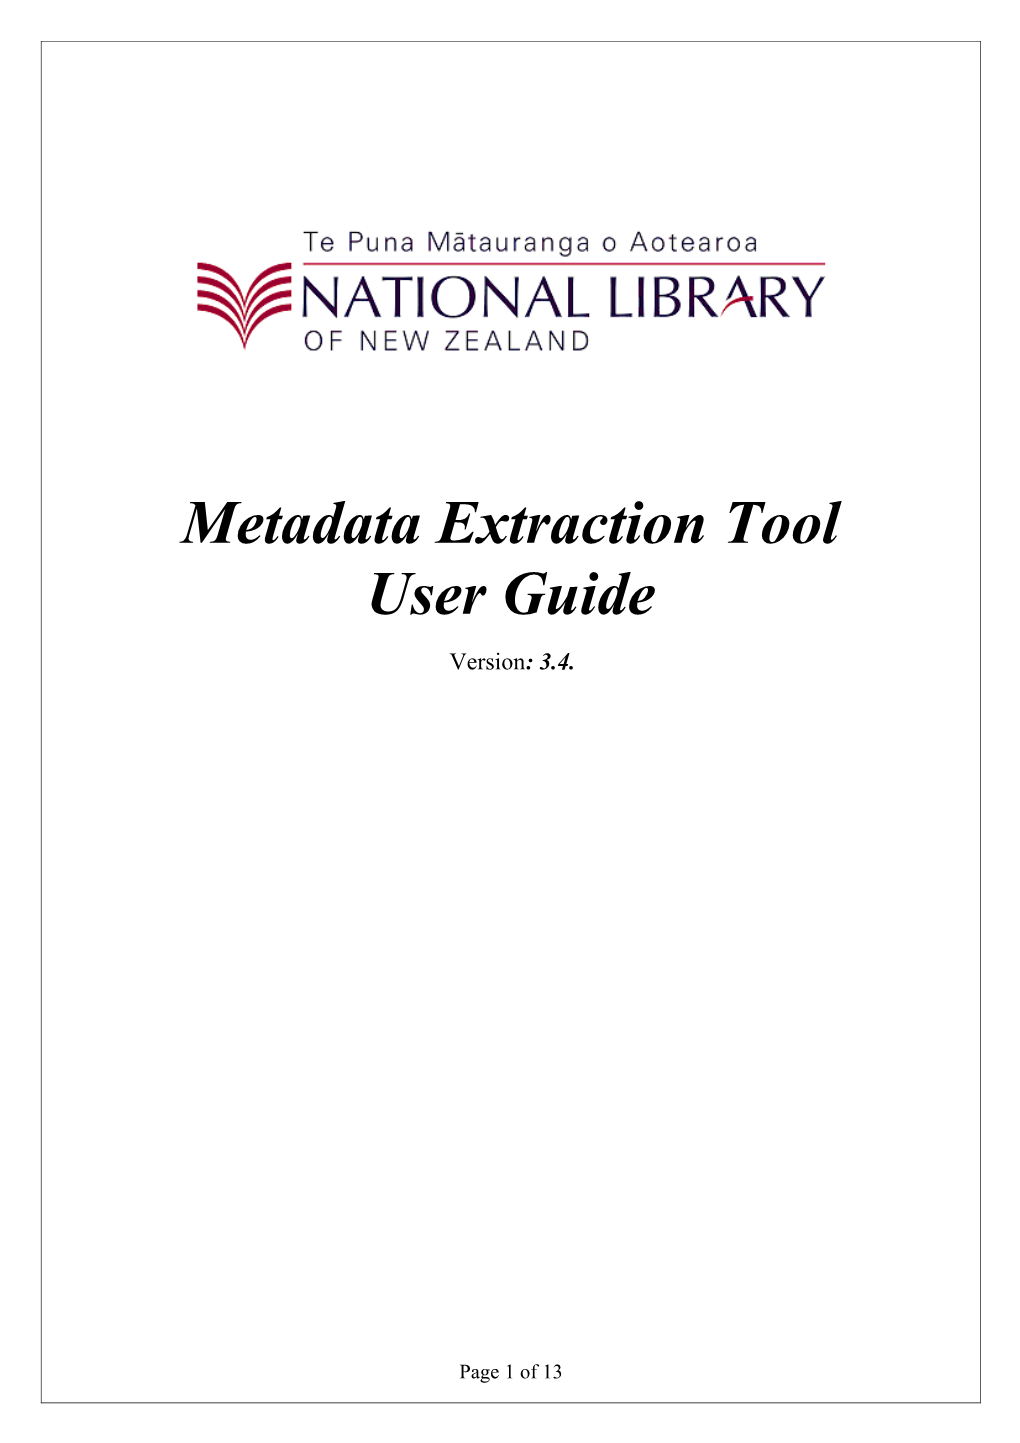 Metadata Extraction Tool, Tutorial